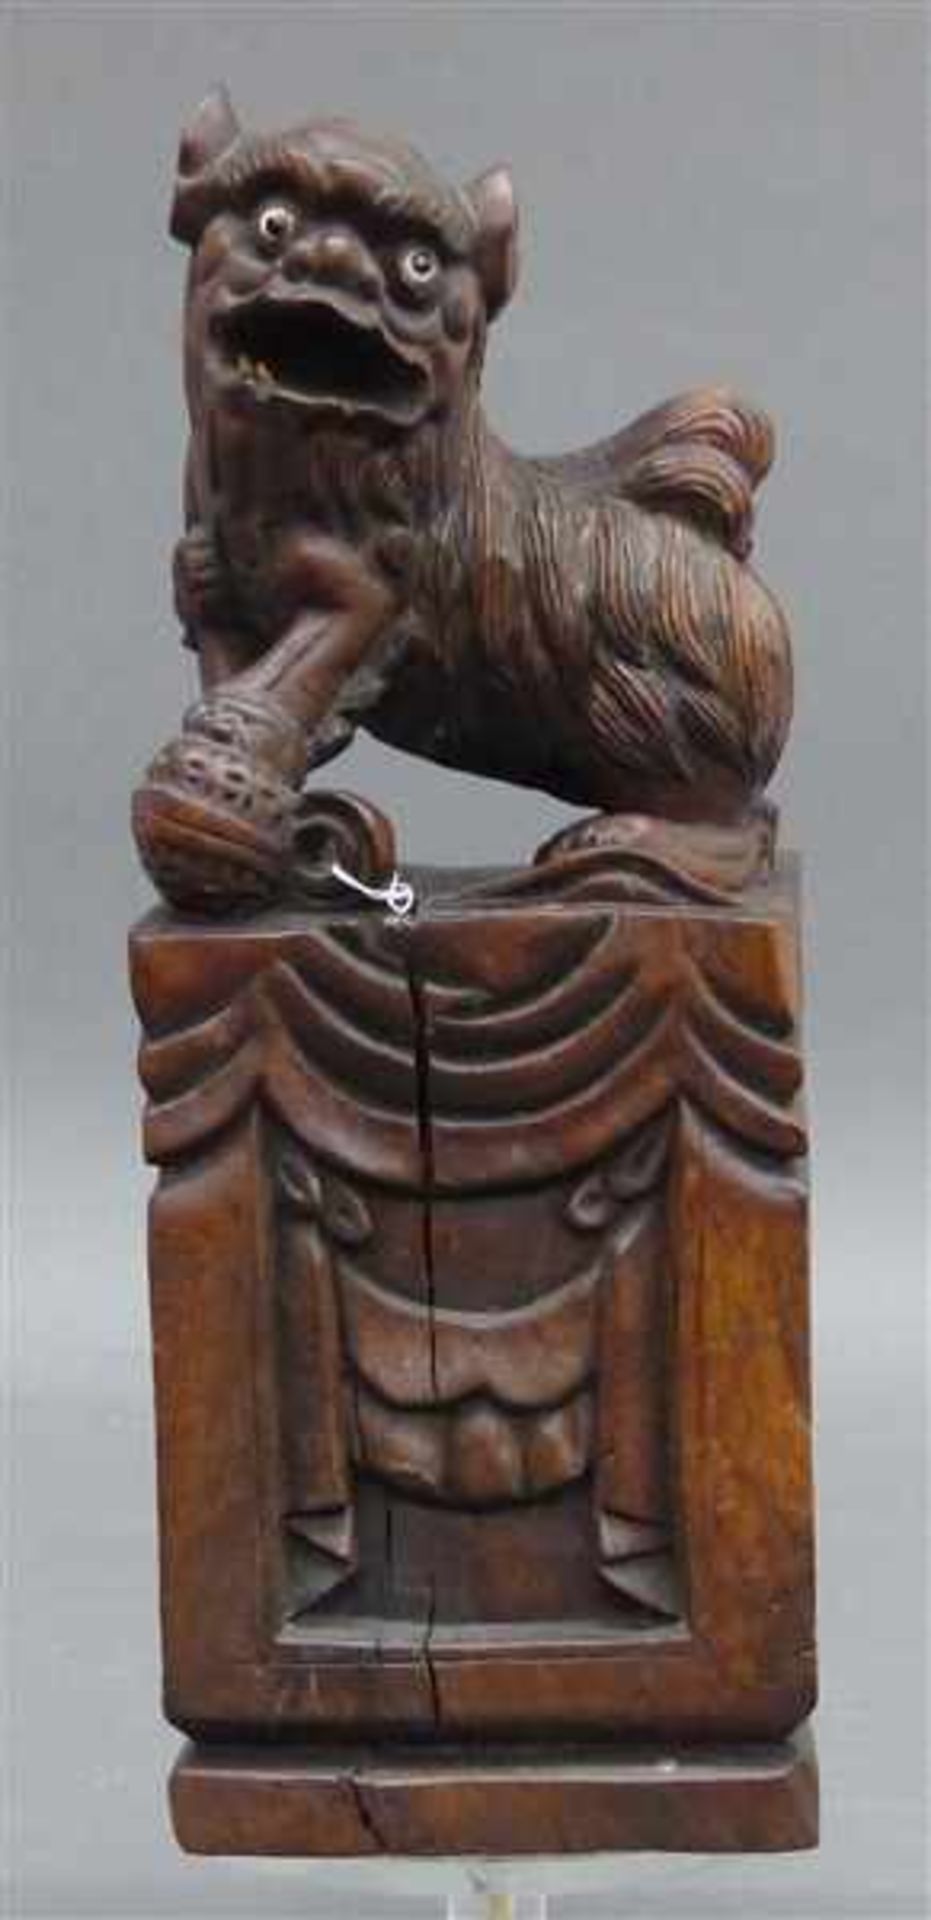 Holzskulptursitzender Fo Hund auf Holzquader, China, 20. Jh., h 26 cm,